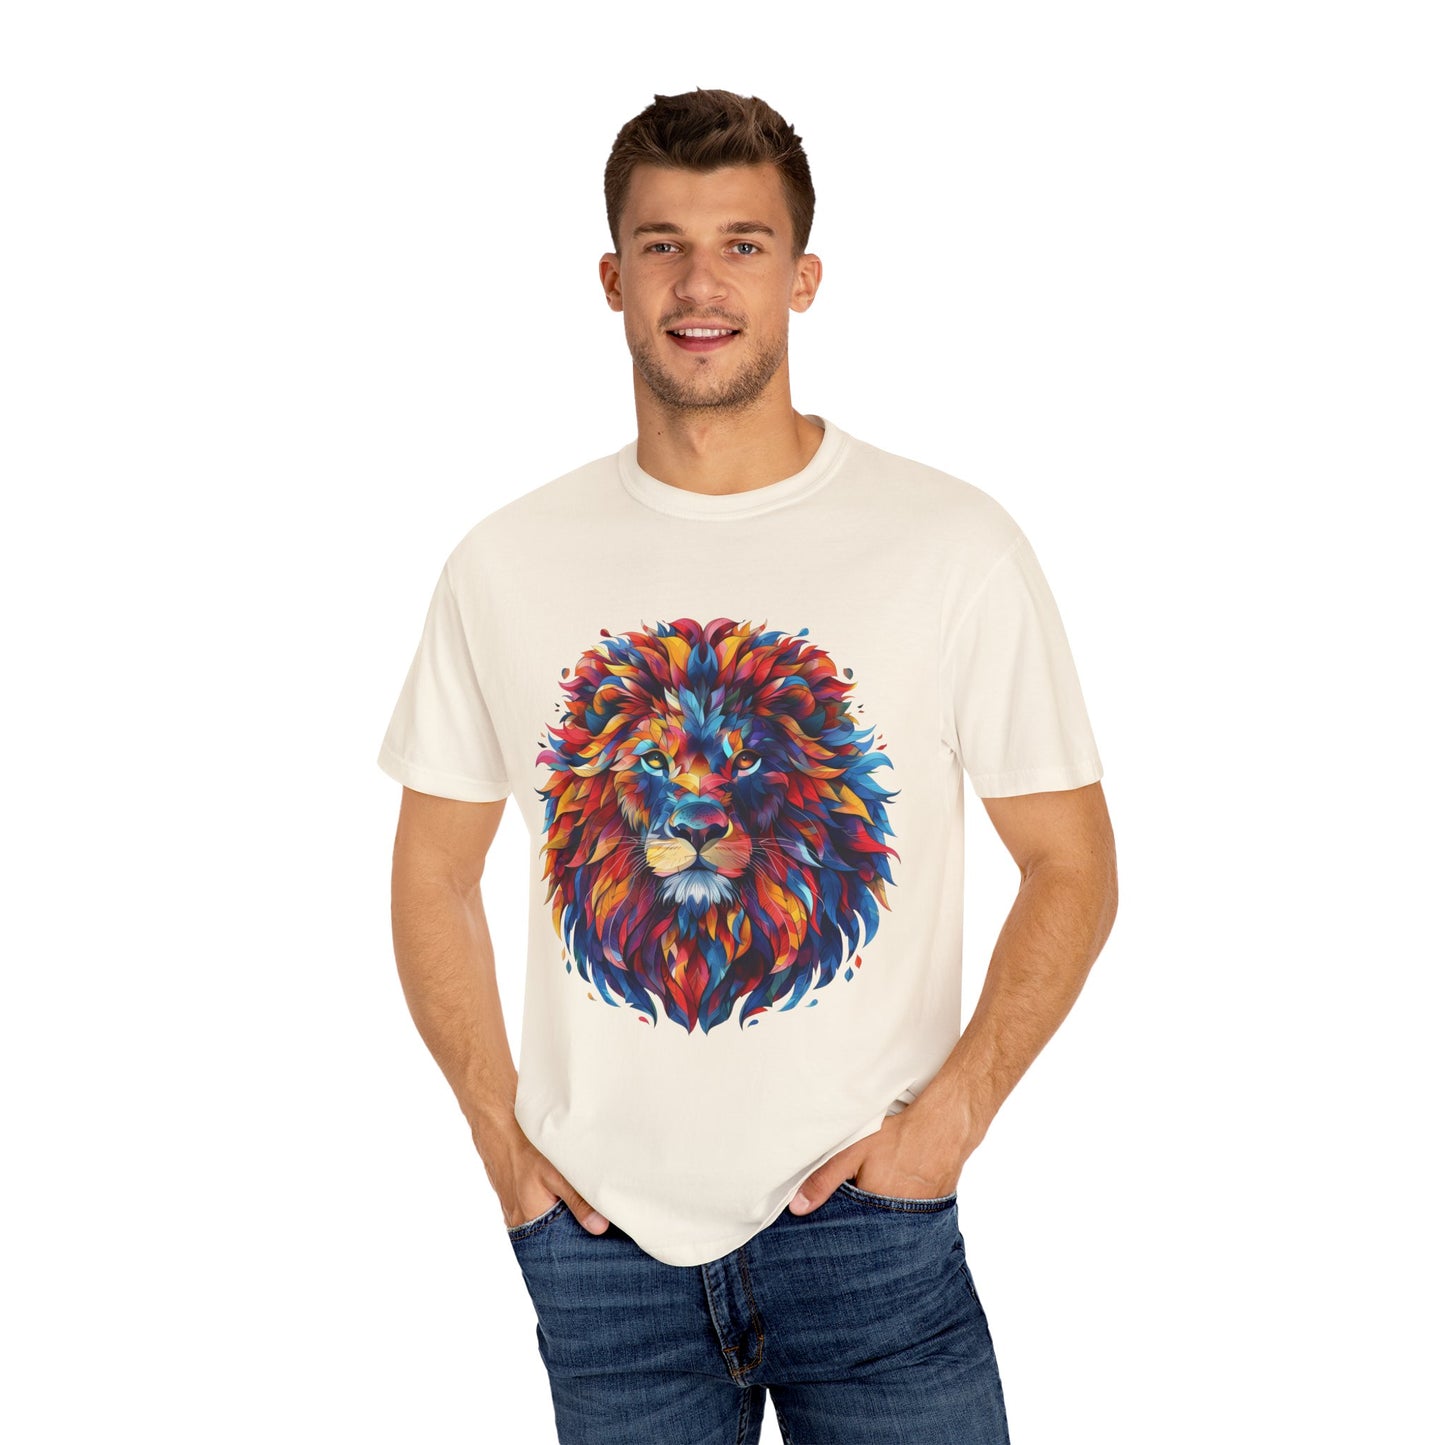 Lion Head Cool Graphic Design Novelty Unisex Garment-dyed T-shirt Cotton Funny Humorous Graphic Soft Premium Unisex Men Women Ivory T-shirt Birthday Gift-45